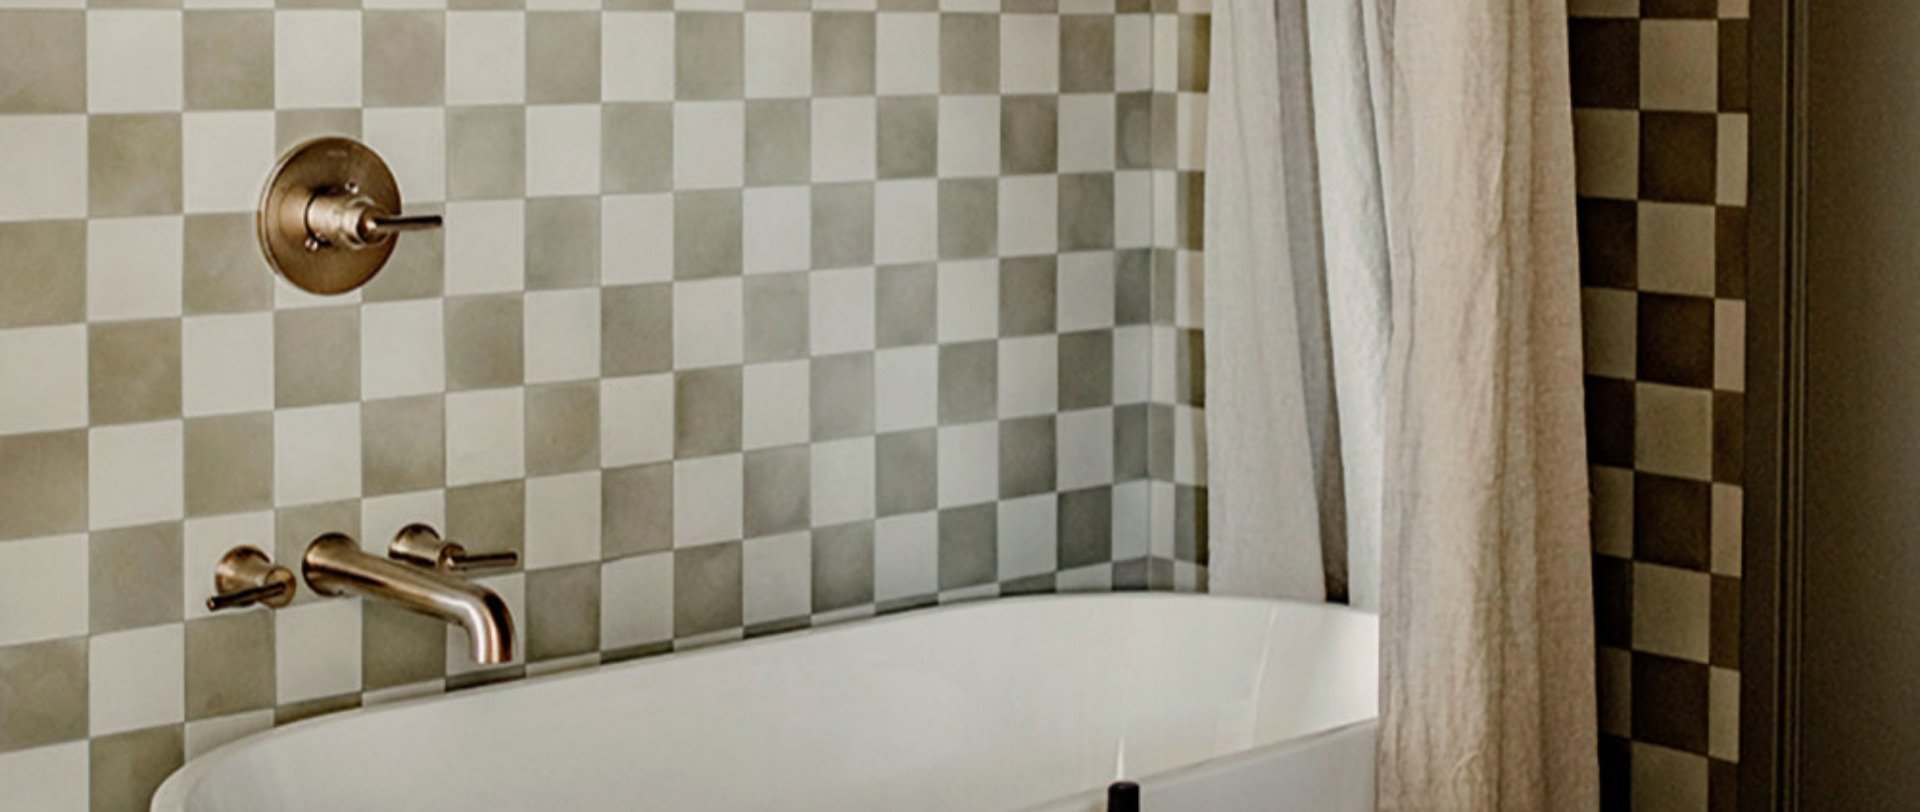 Villa Lagoon Tile Solid Seashell White and Dry Sage cement tile bathroom, designed by Sarah Sherman Samuel.